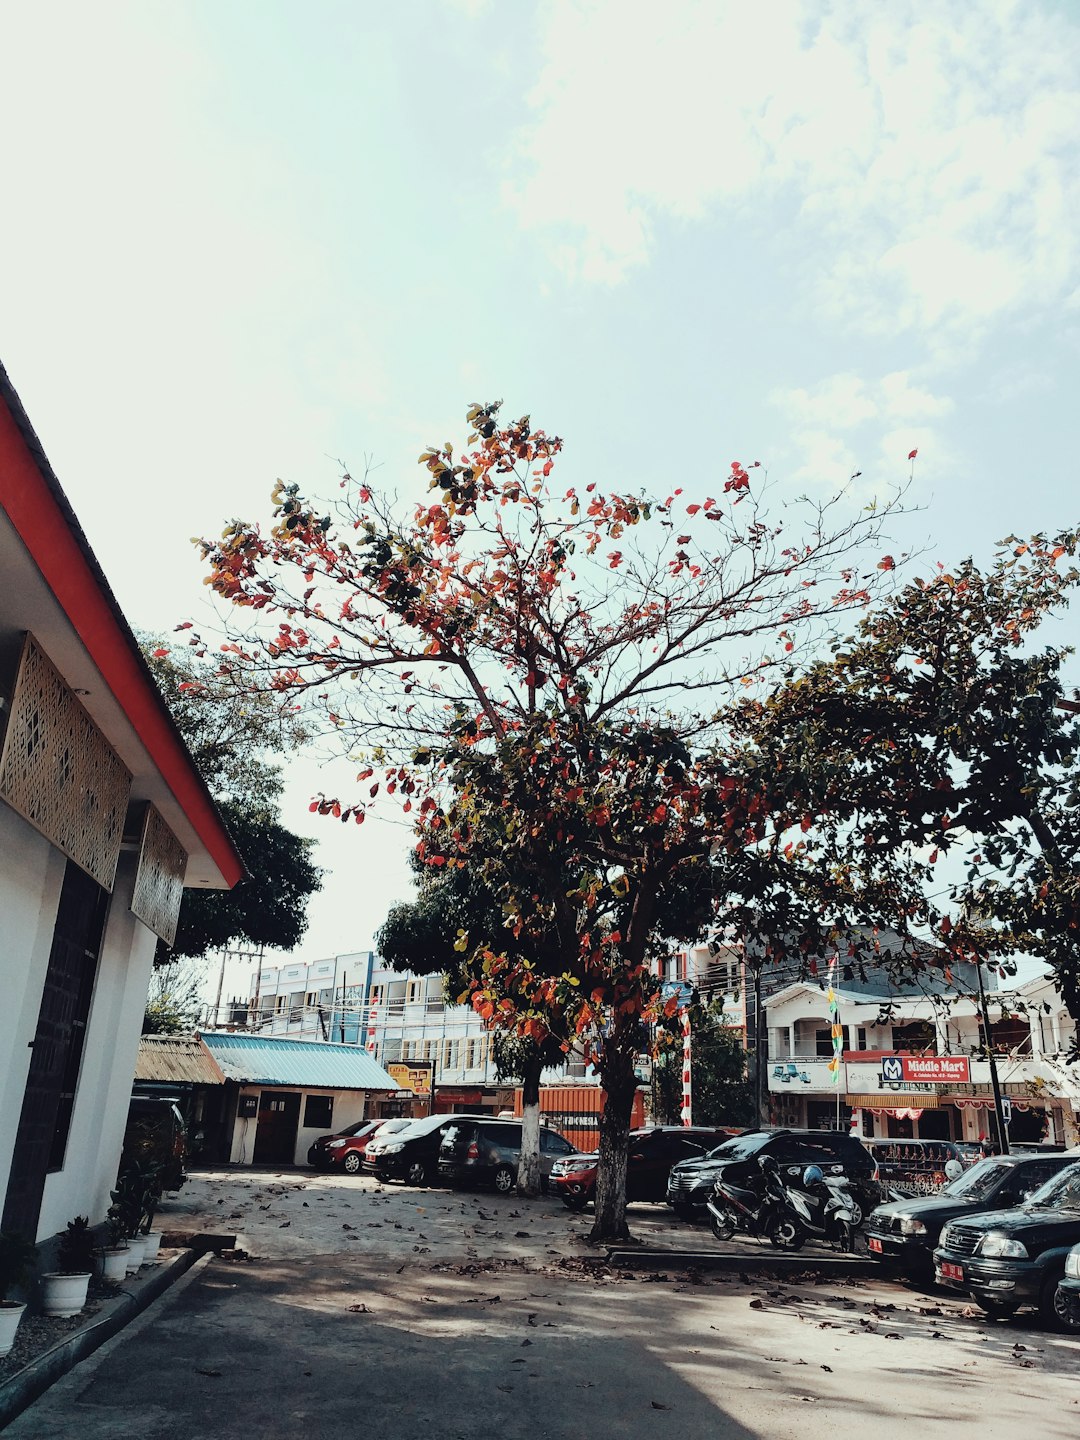 Town photo spot Jl. Palapa No.21a Indonesia